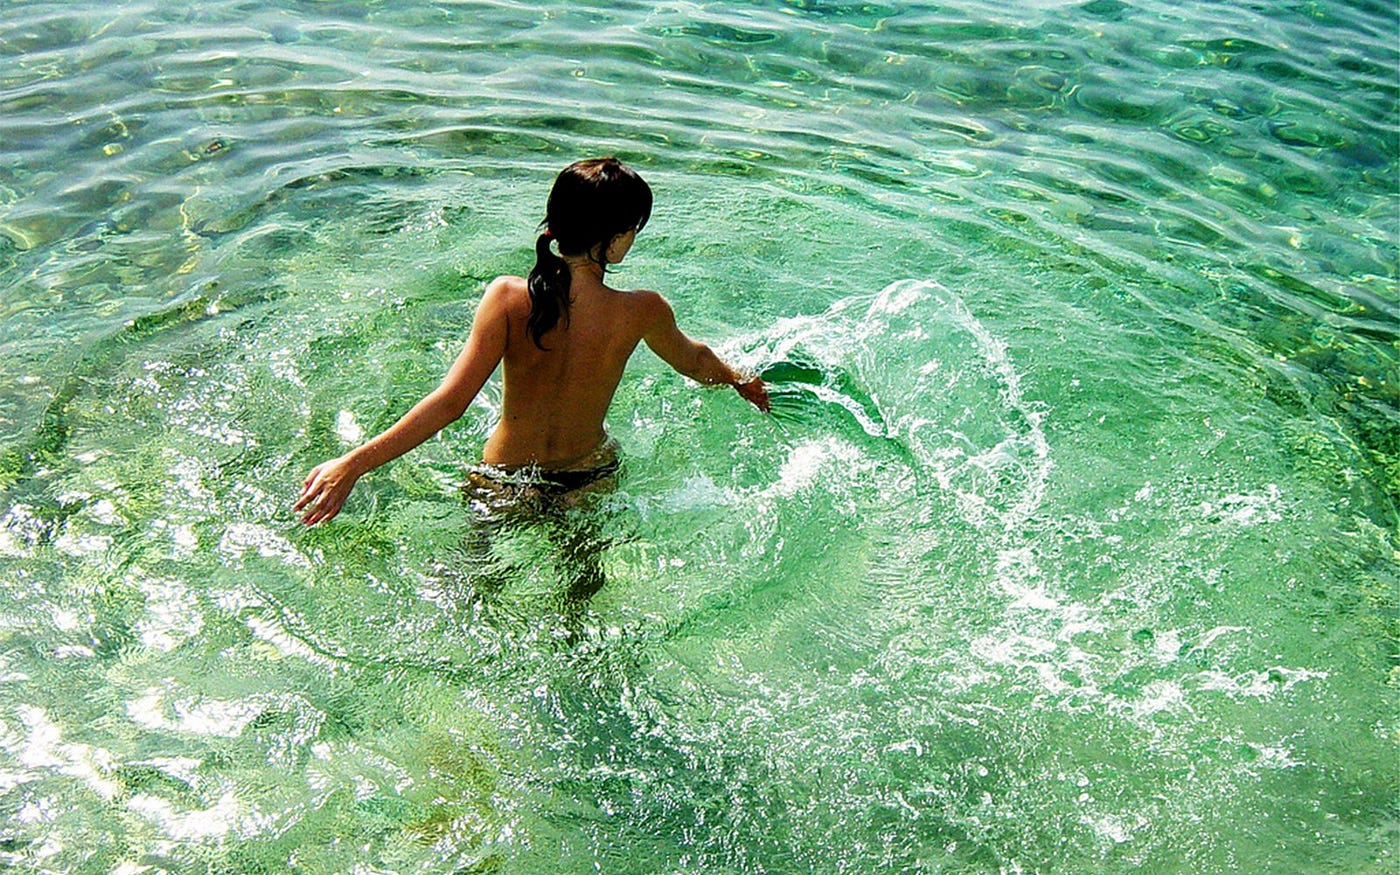 Nude Wreck Beach Run - 10 Best Nude Beaches for First Timers | by Lu Leslan | Medium